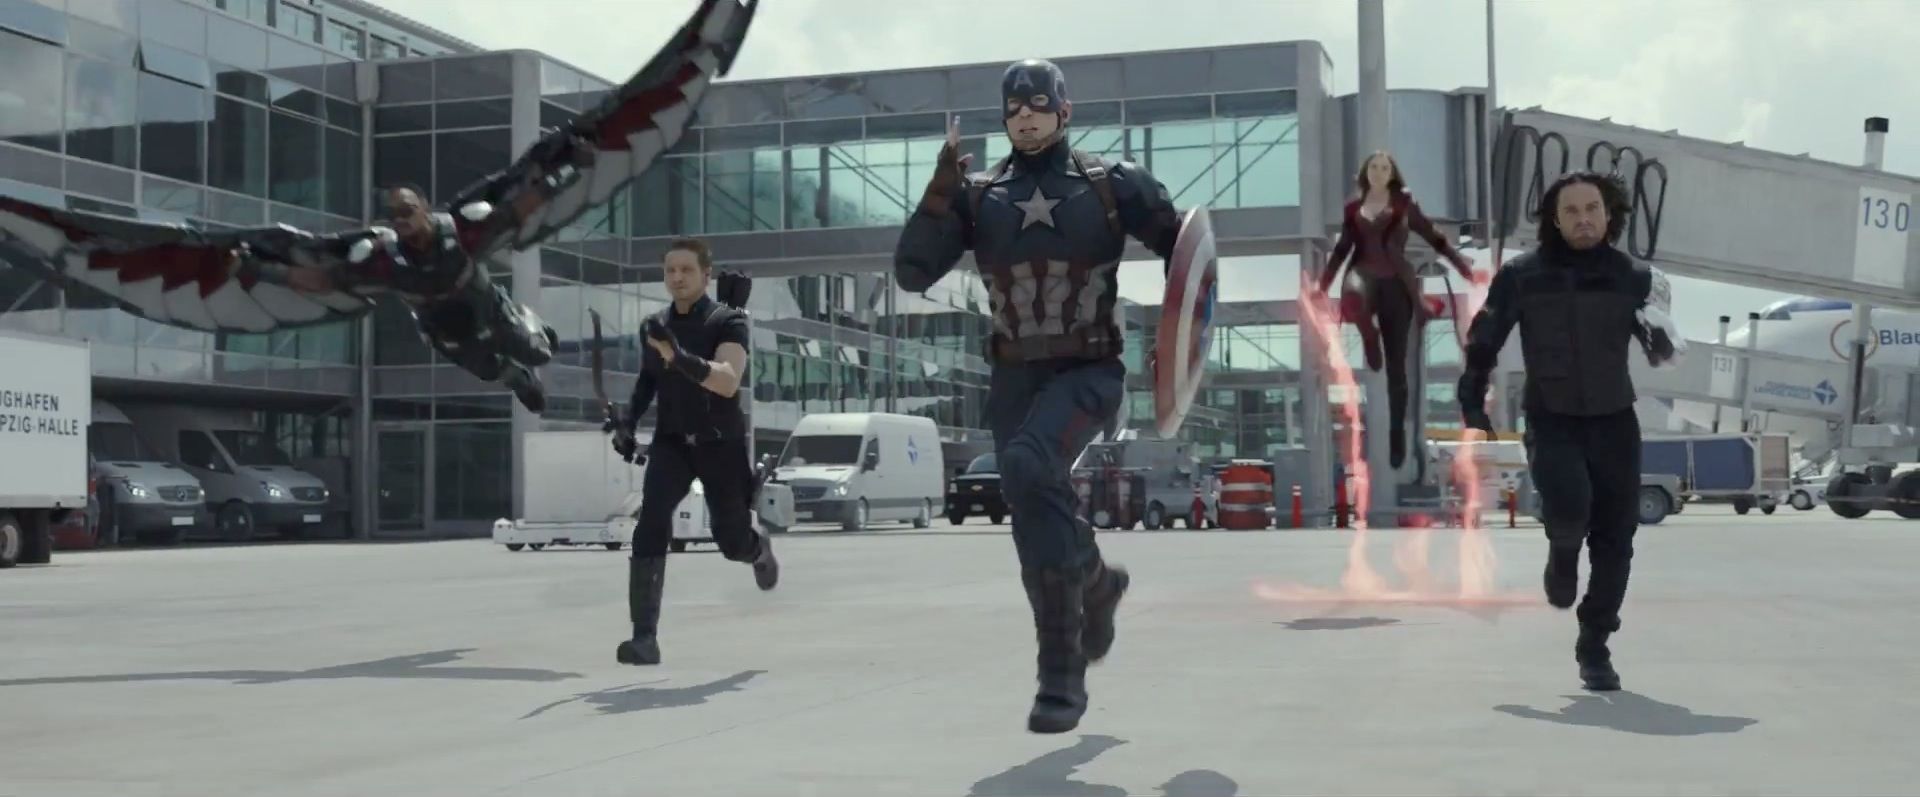 1448443014 Movies Captain America Civil War Trailer Action 